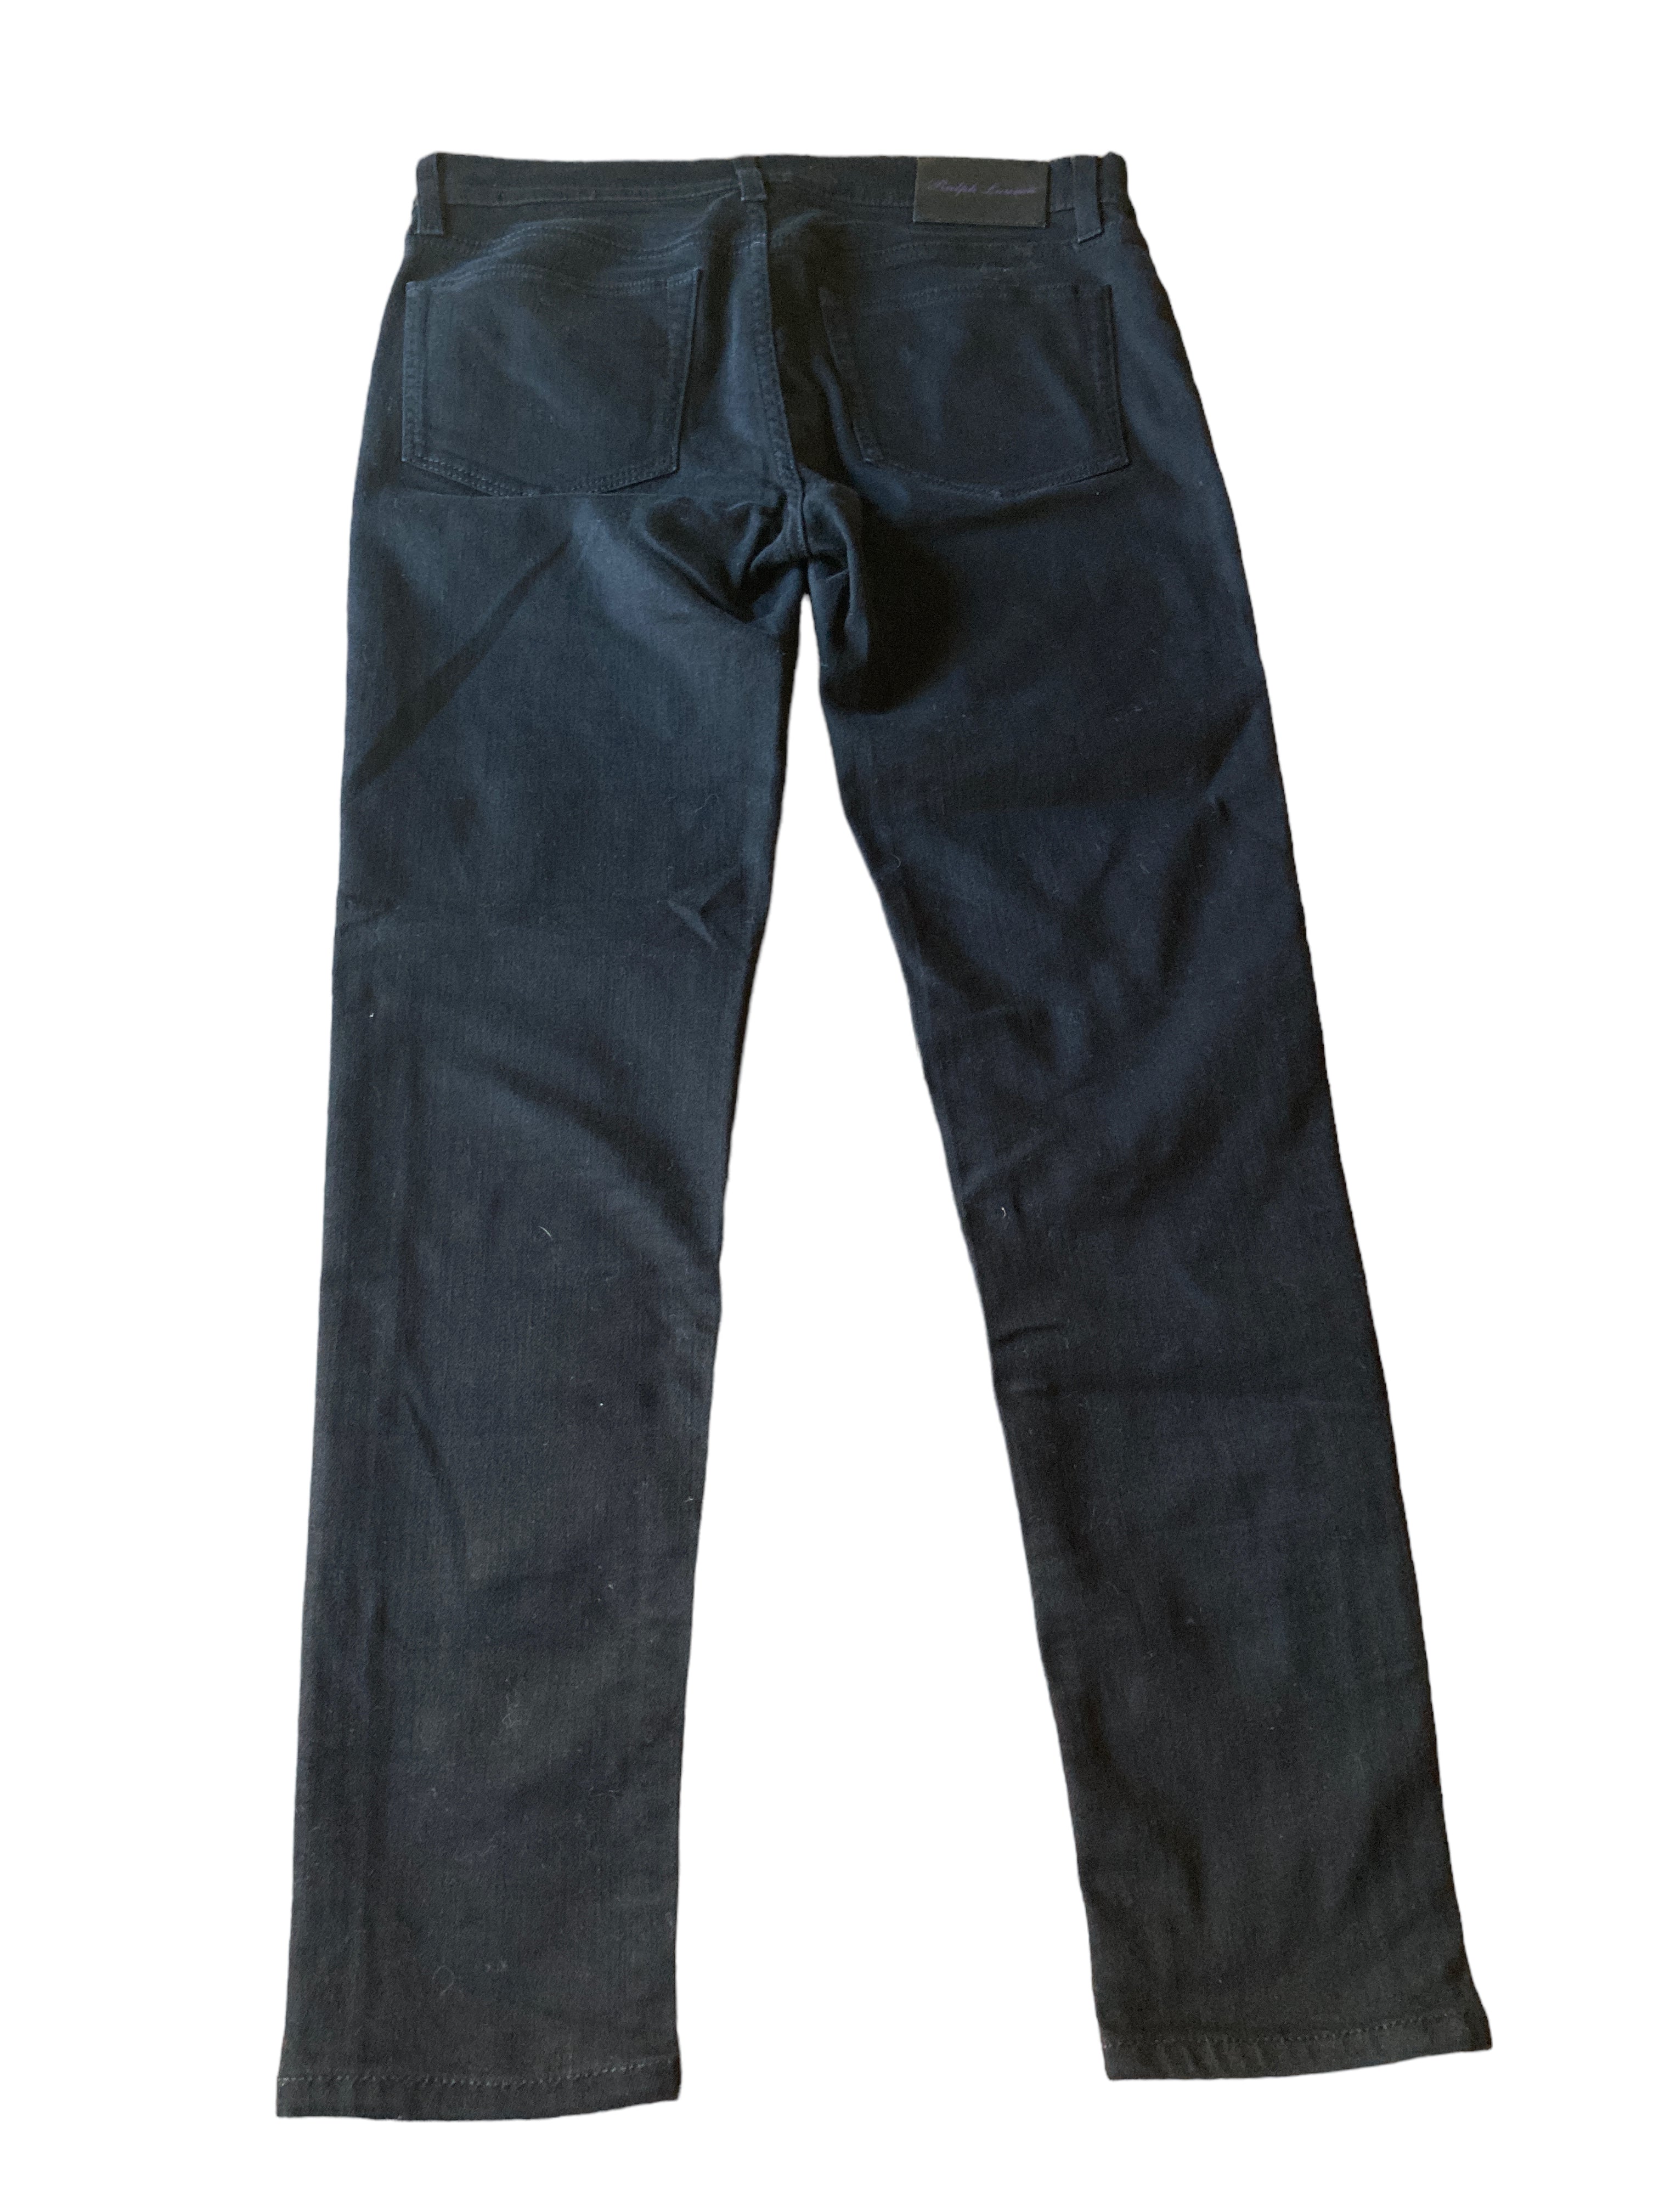 Ralph Lauren Purple Label Black Jeans, 28